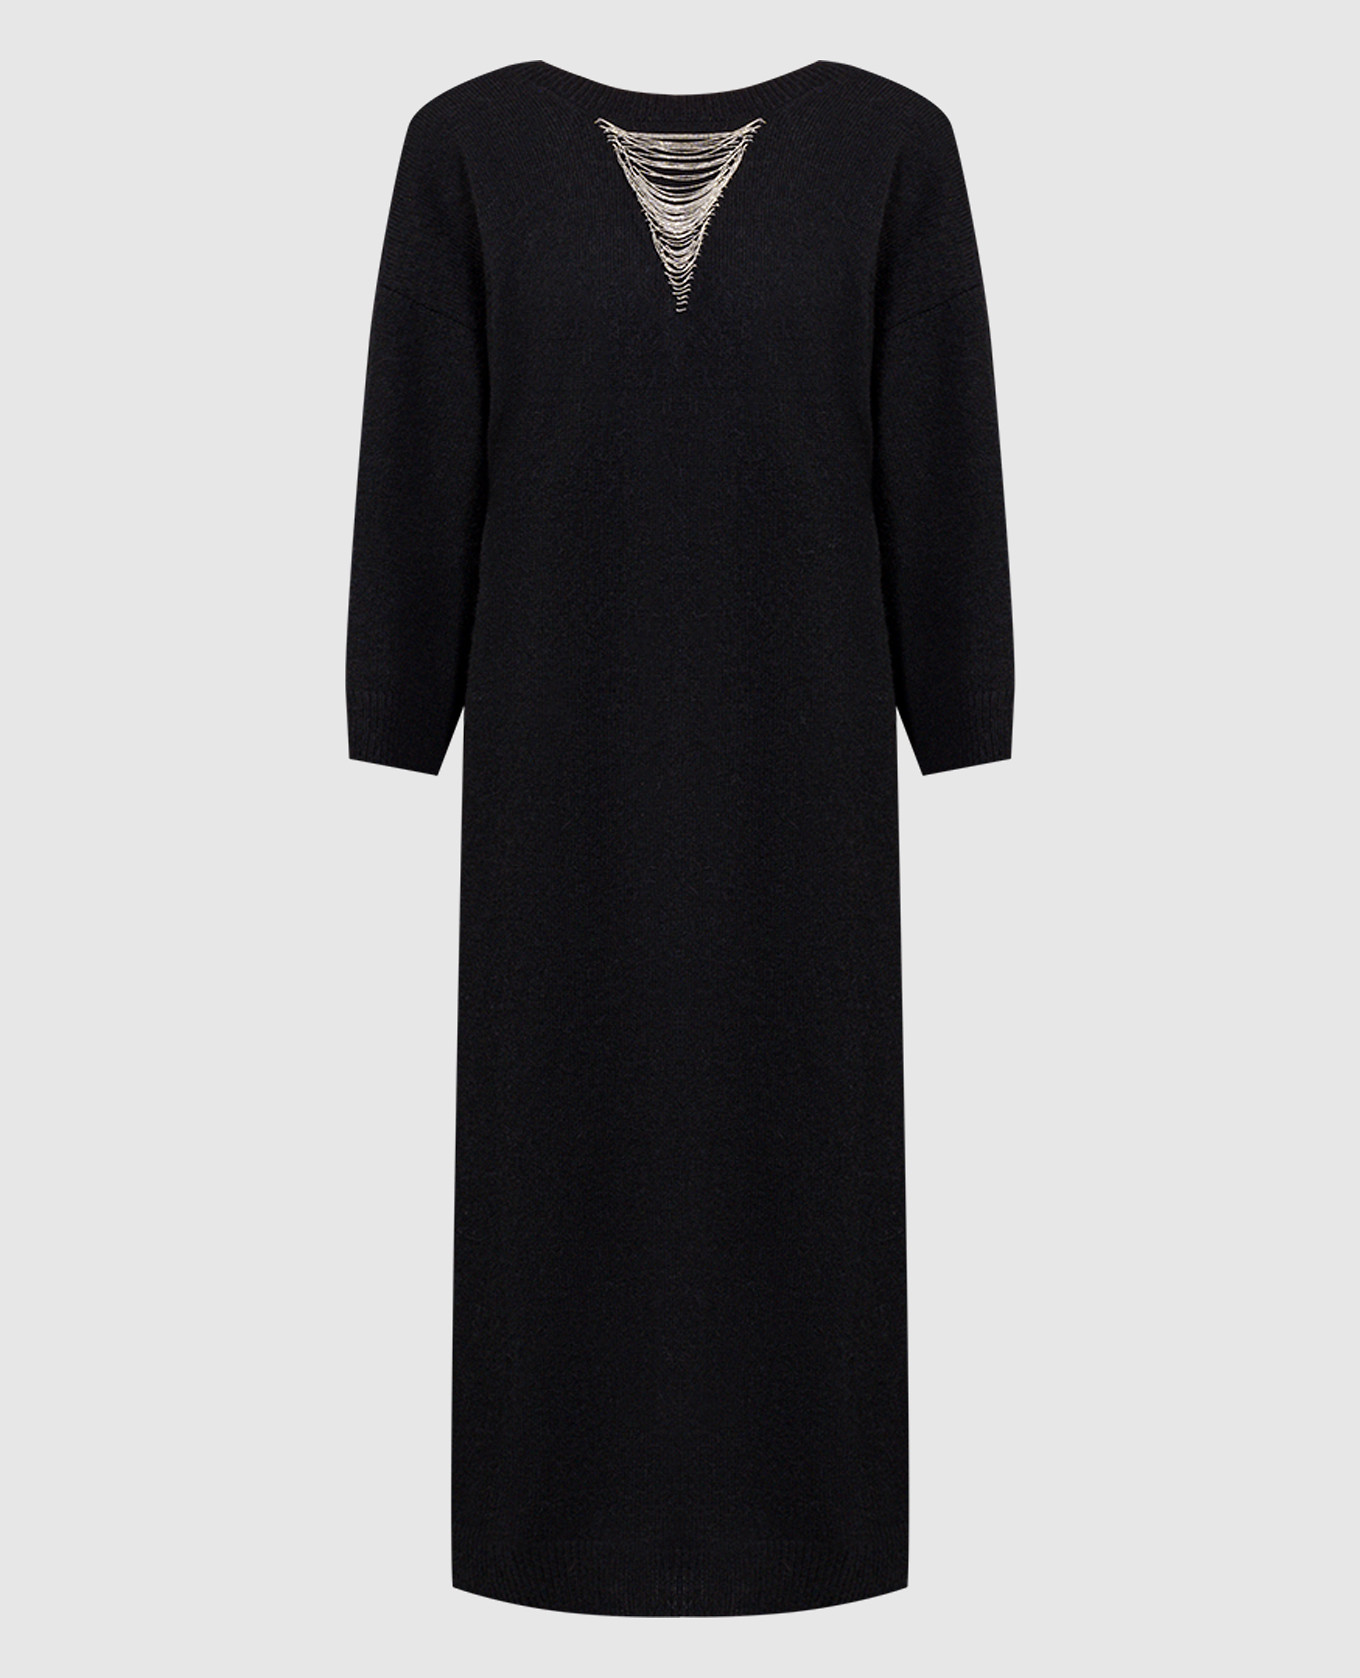 Black wool, silk and cashmere midi dress with monil chain